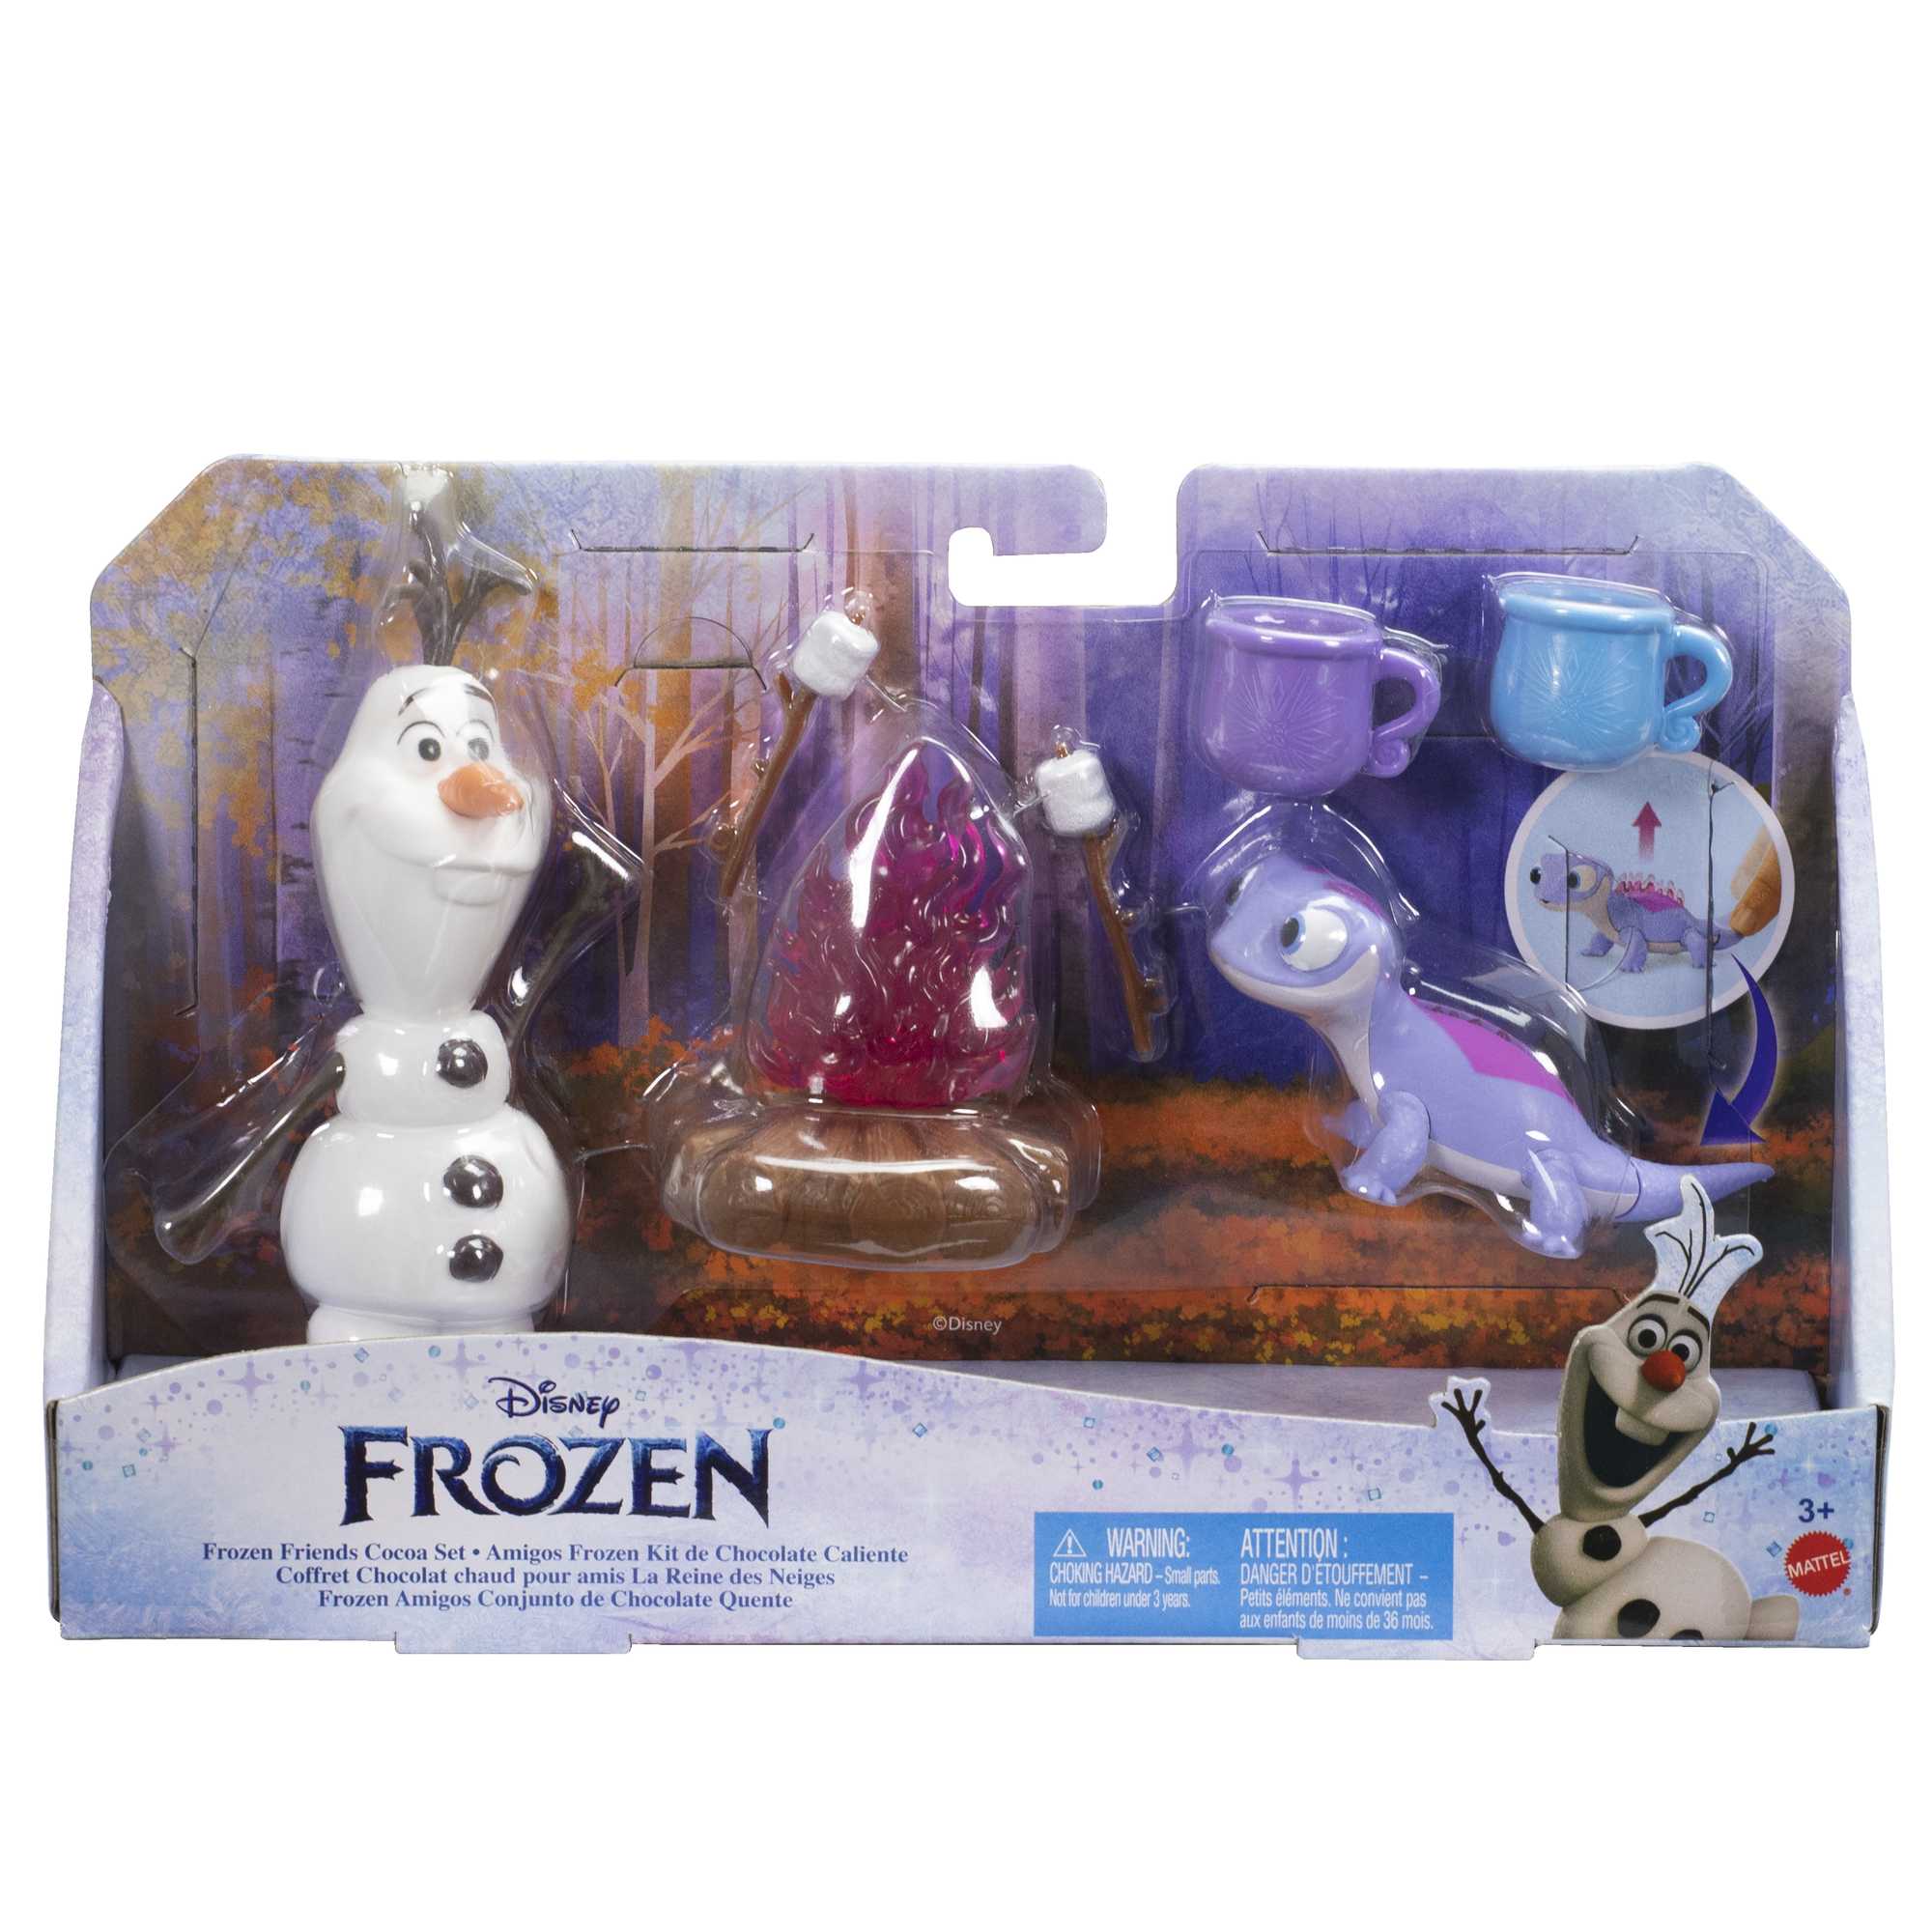 Friends Frozen | Mattel Disney Set Cocoa Frozen